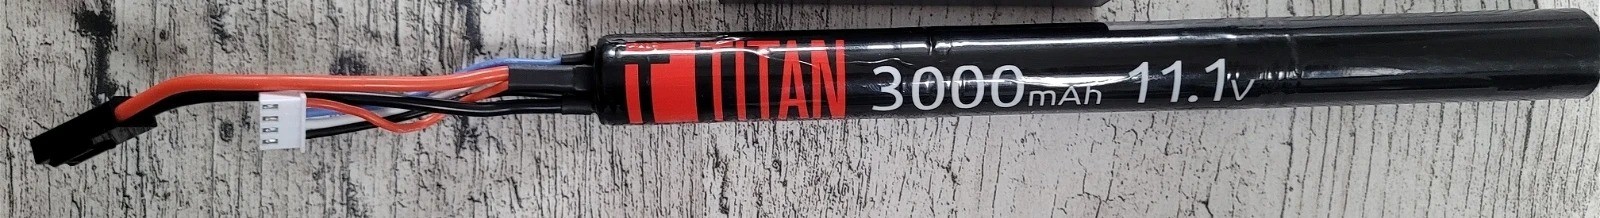 Image for Titan stick 11.1v 3000mah - mini Tamiyah